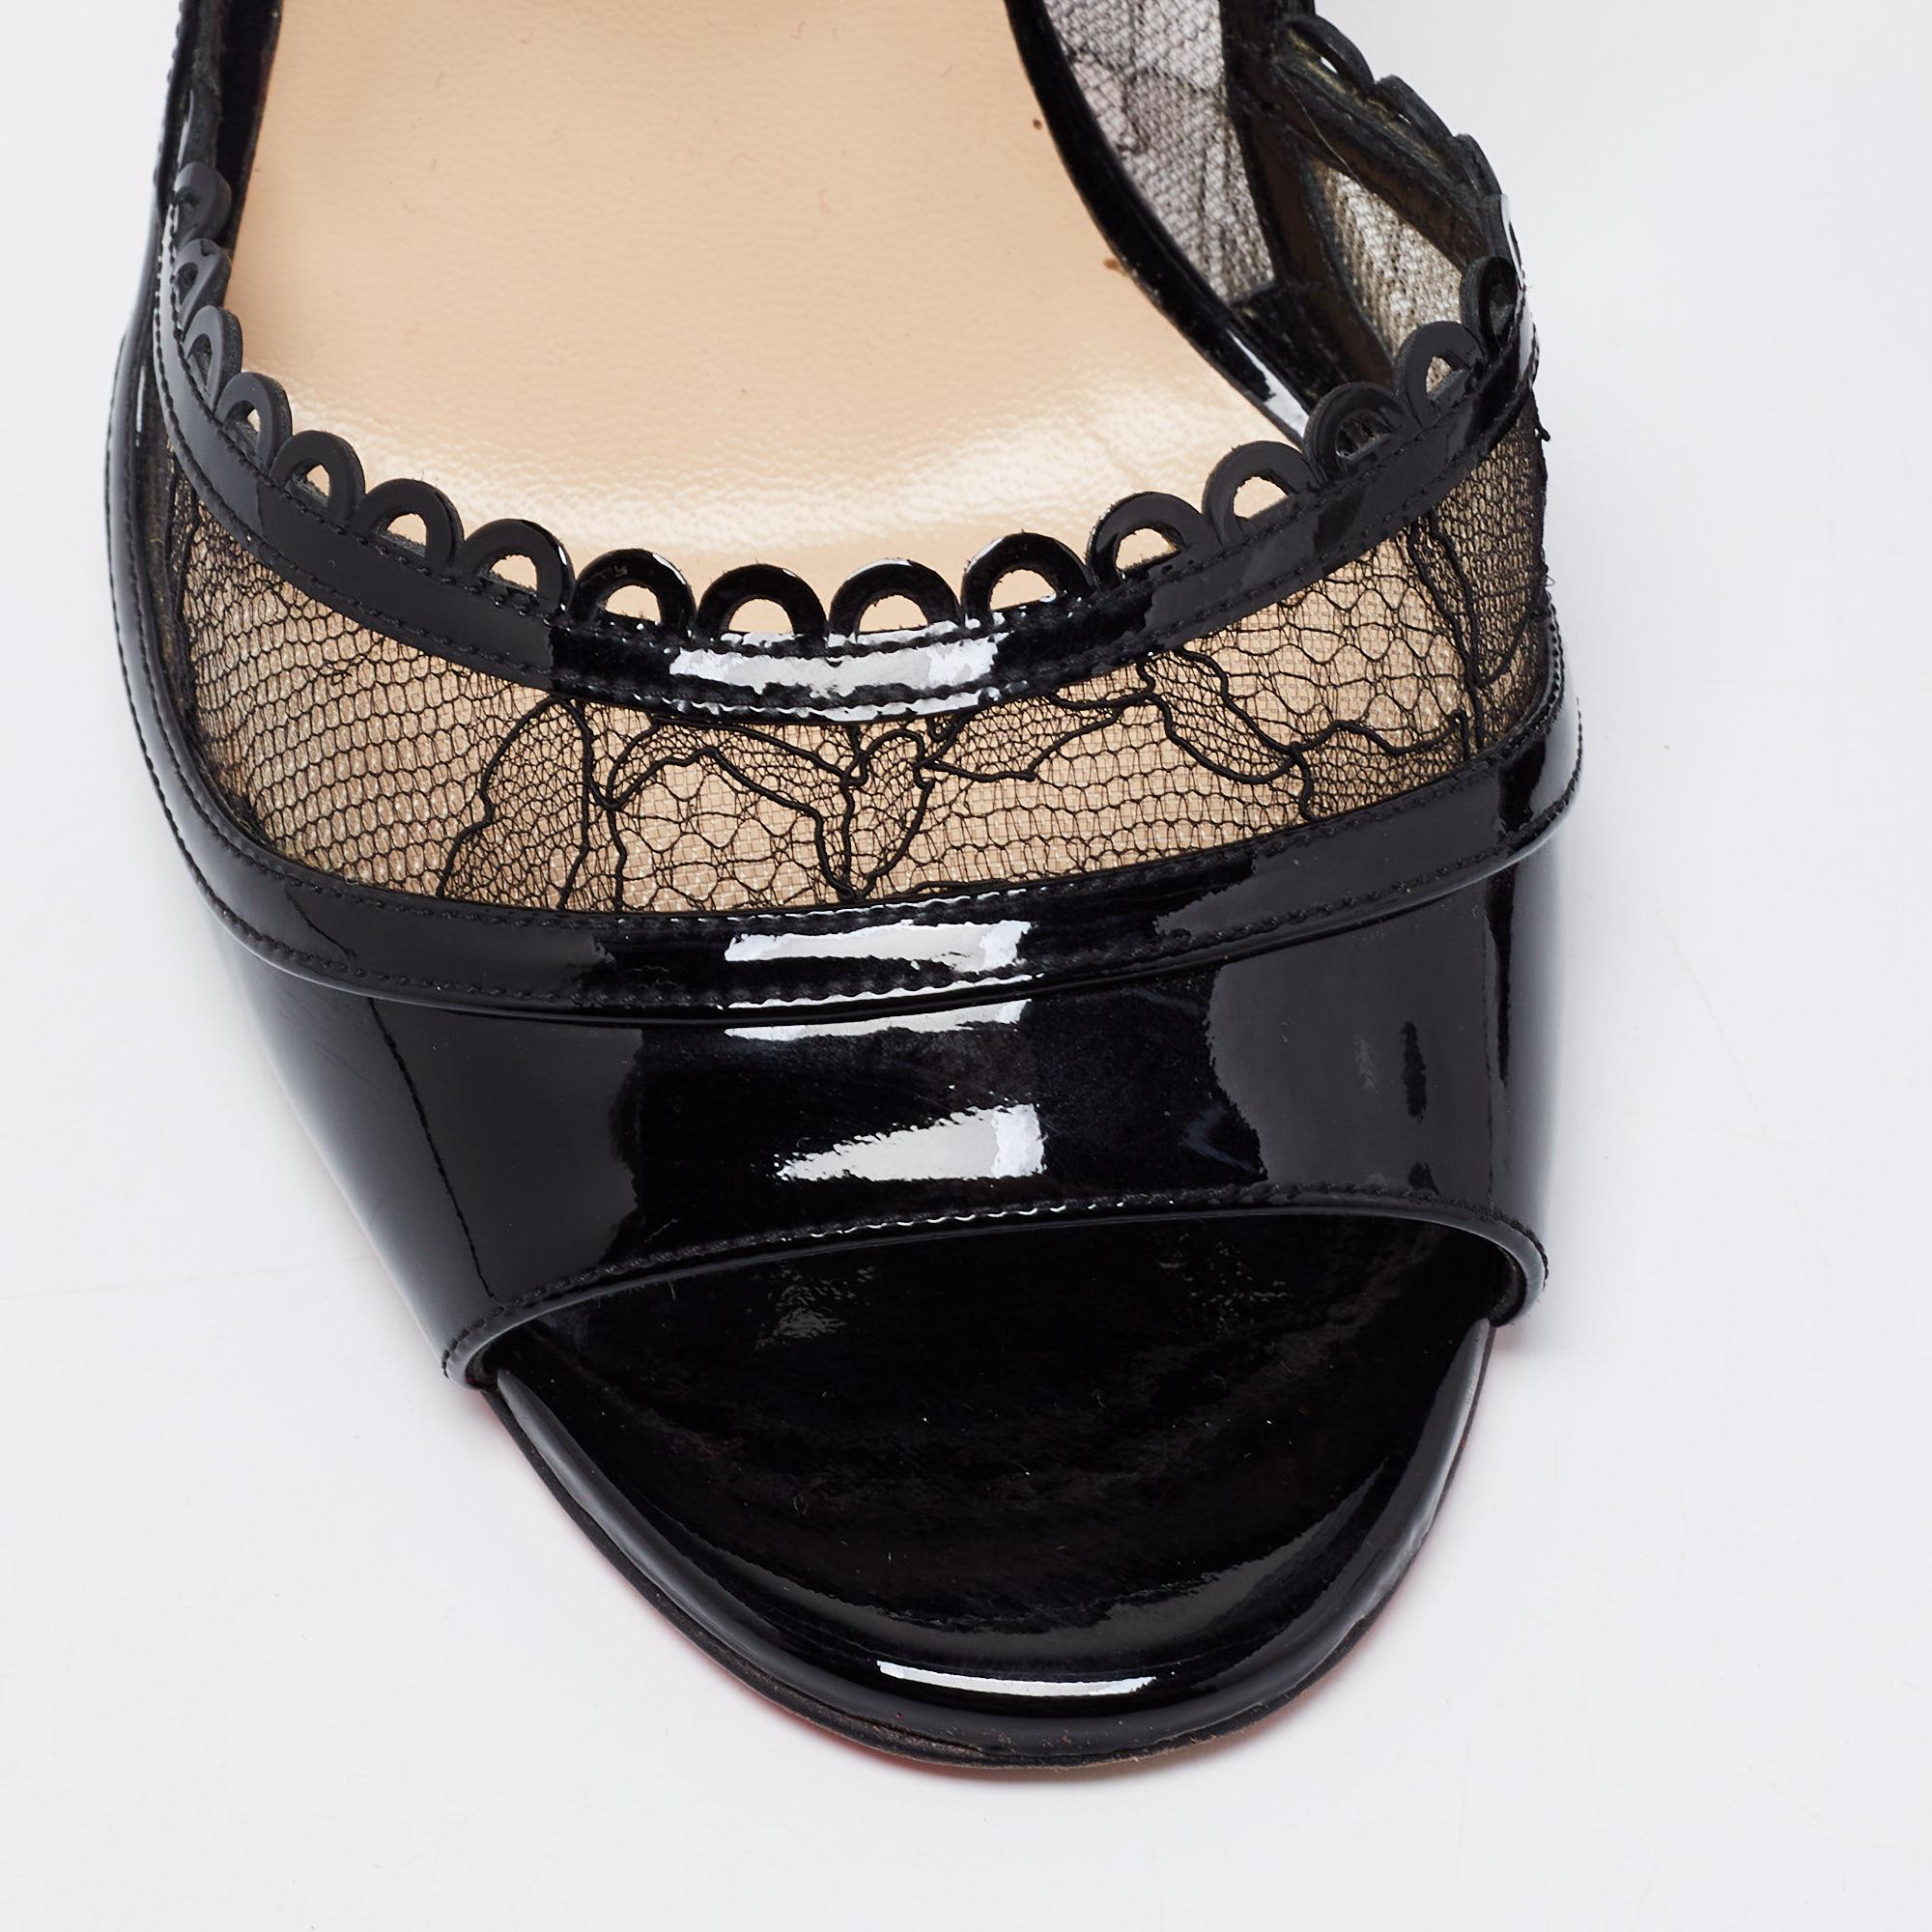 Women's Christian Louboutin Black Lace Patent Chantilly Butterfly Open-Toe Pumps Size 39